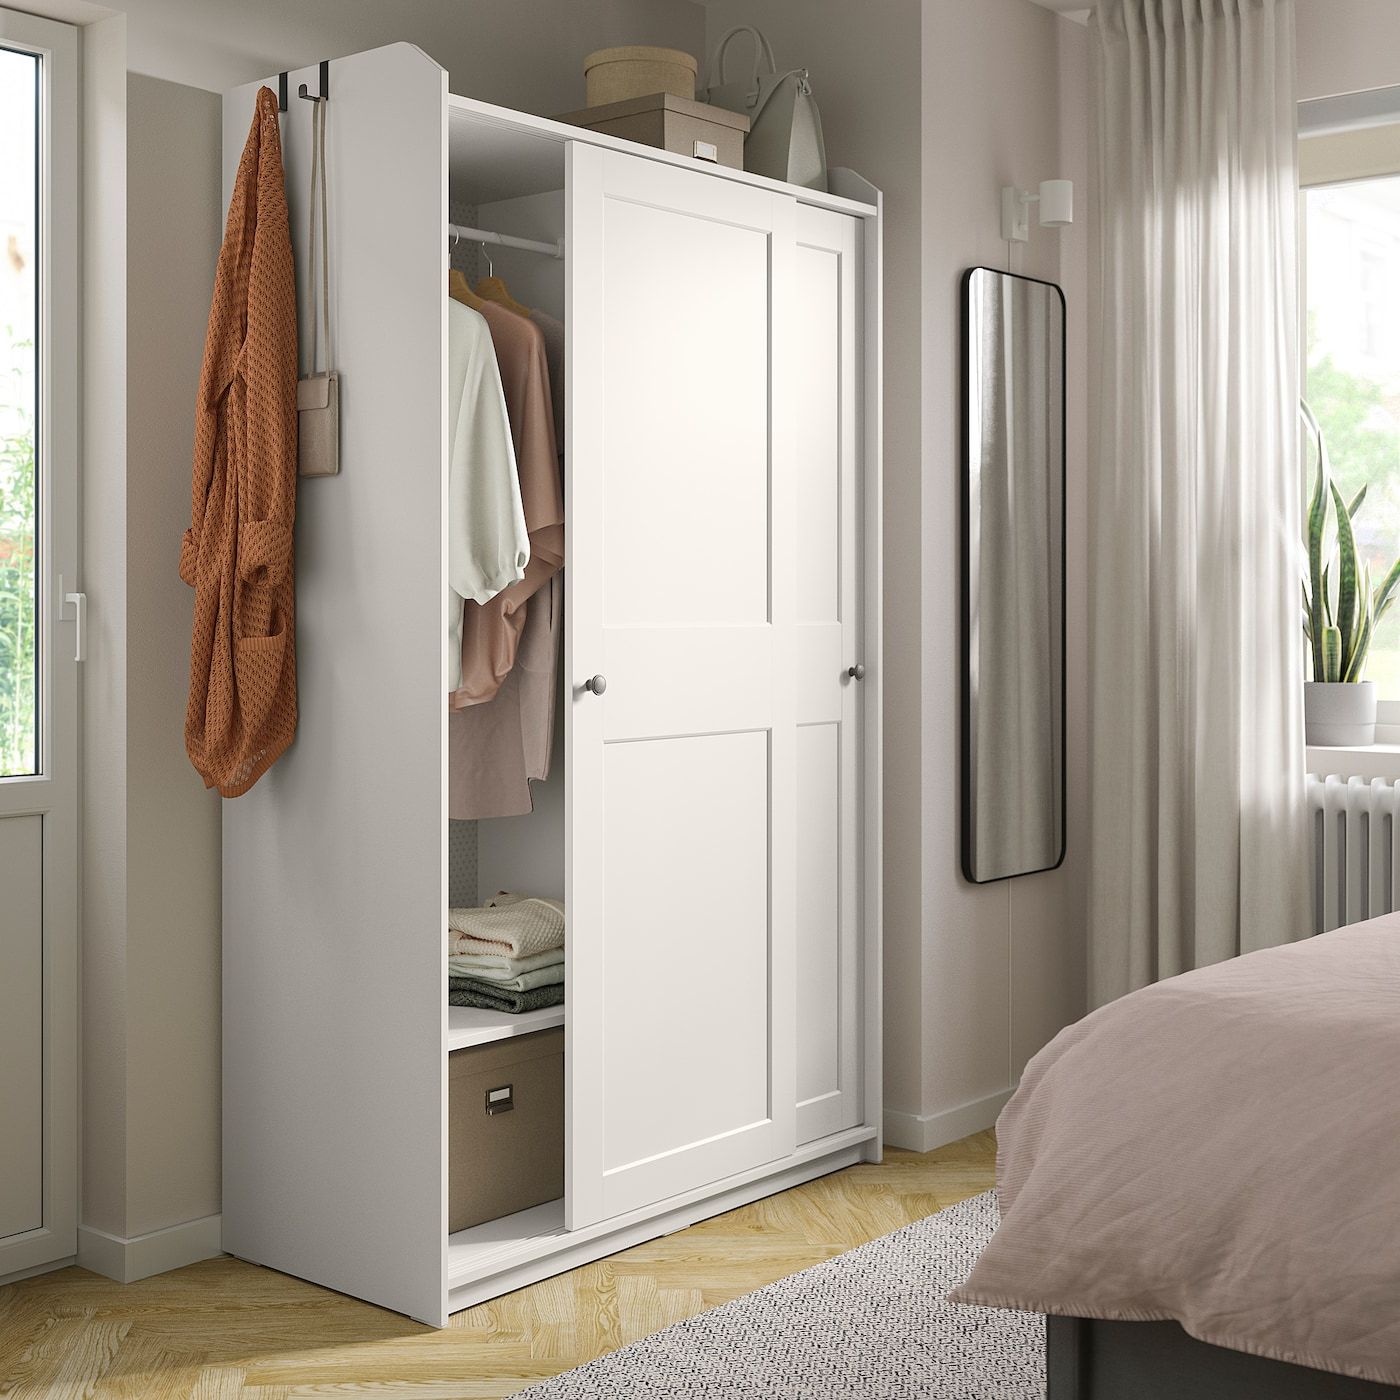 Hauga Wardrobe With Sliding Doors, White, 118x55x199 Cm – Ikea Pertaining To Sliding Door Wardrobes (Gallery 13 of 20)